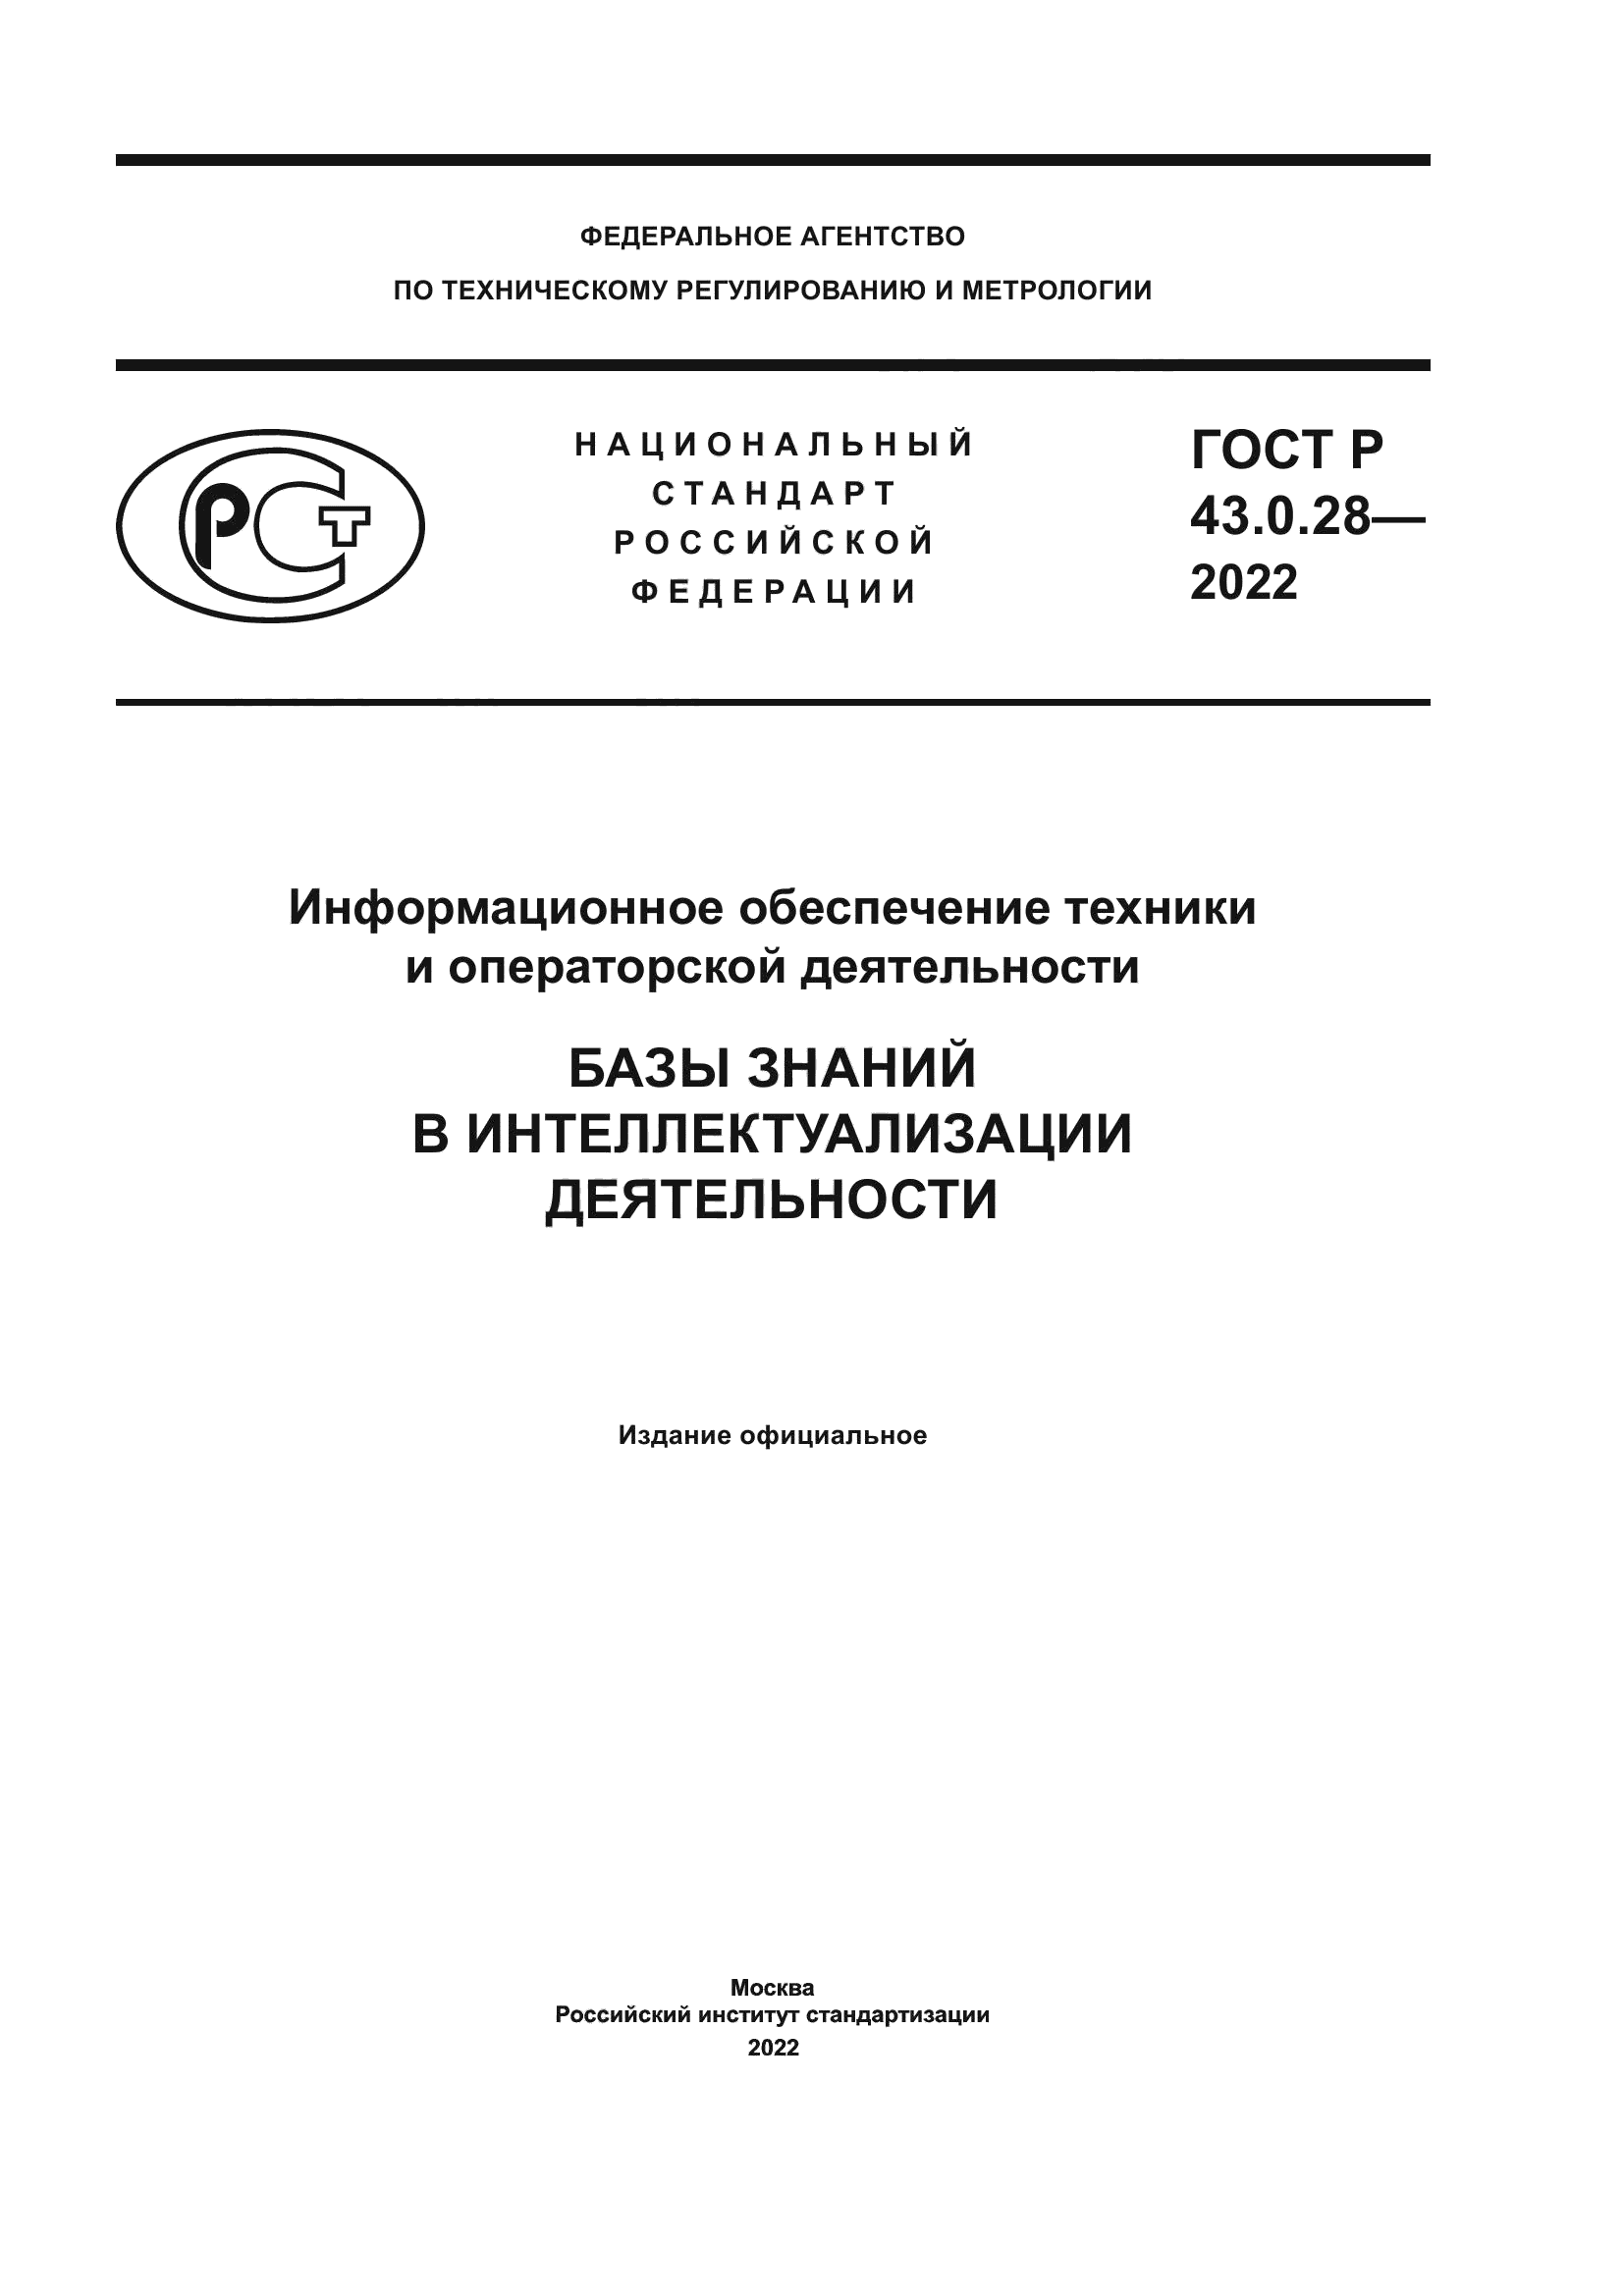 ГОСТ Р 43.0.28-2022